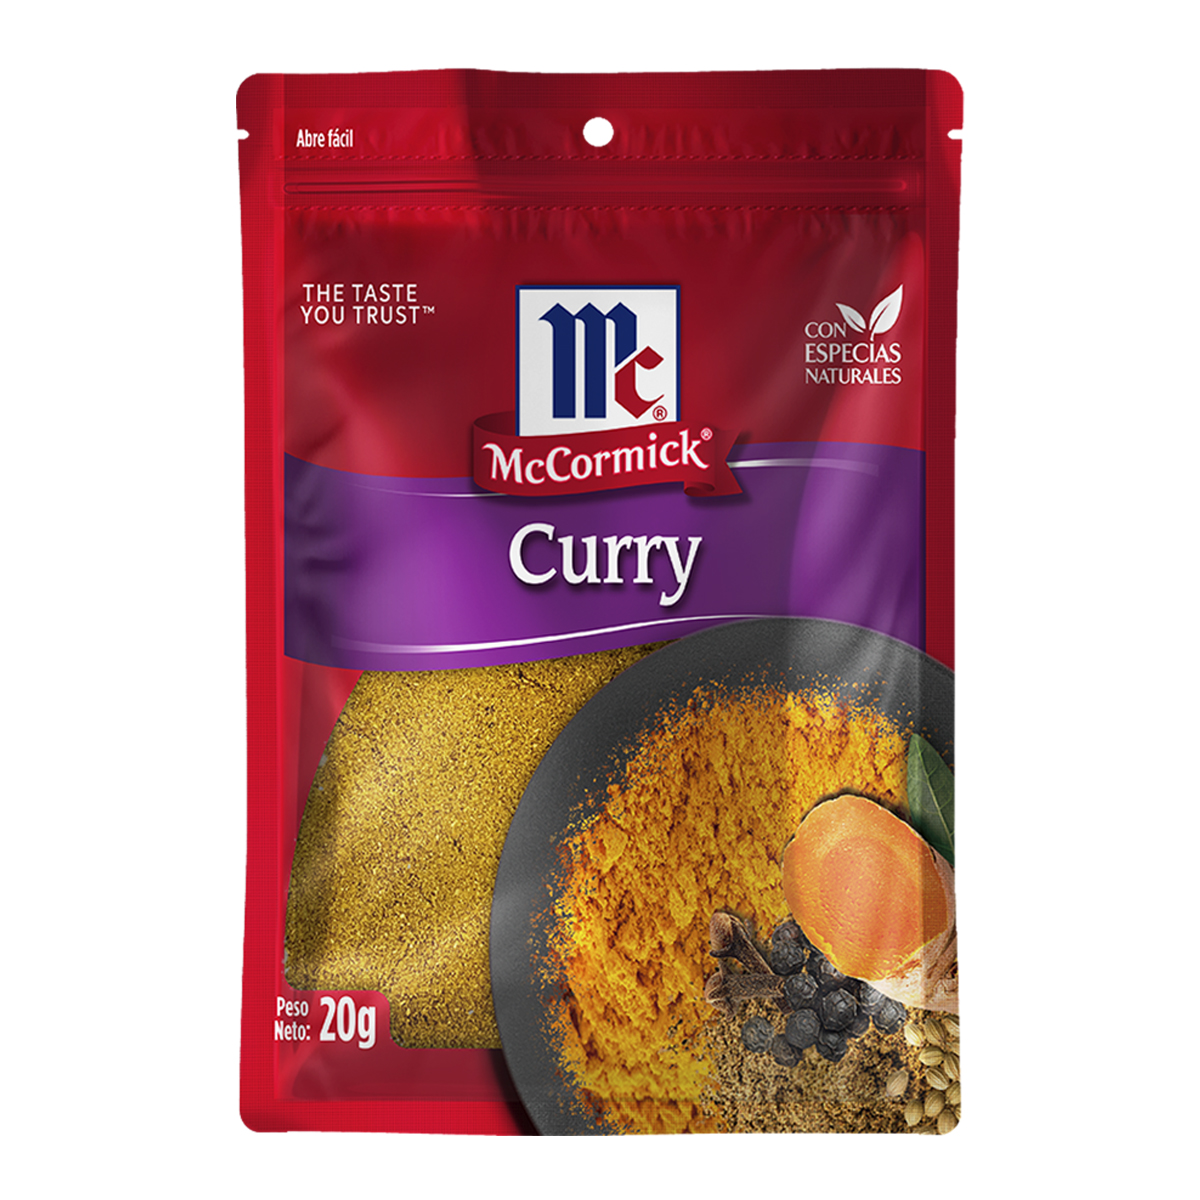 Un juego de especias para cocinar curry. Condimentos aromáticos